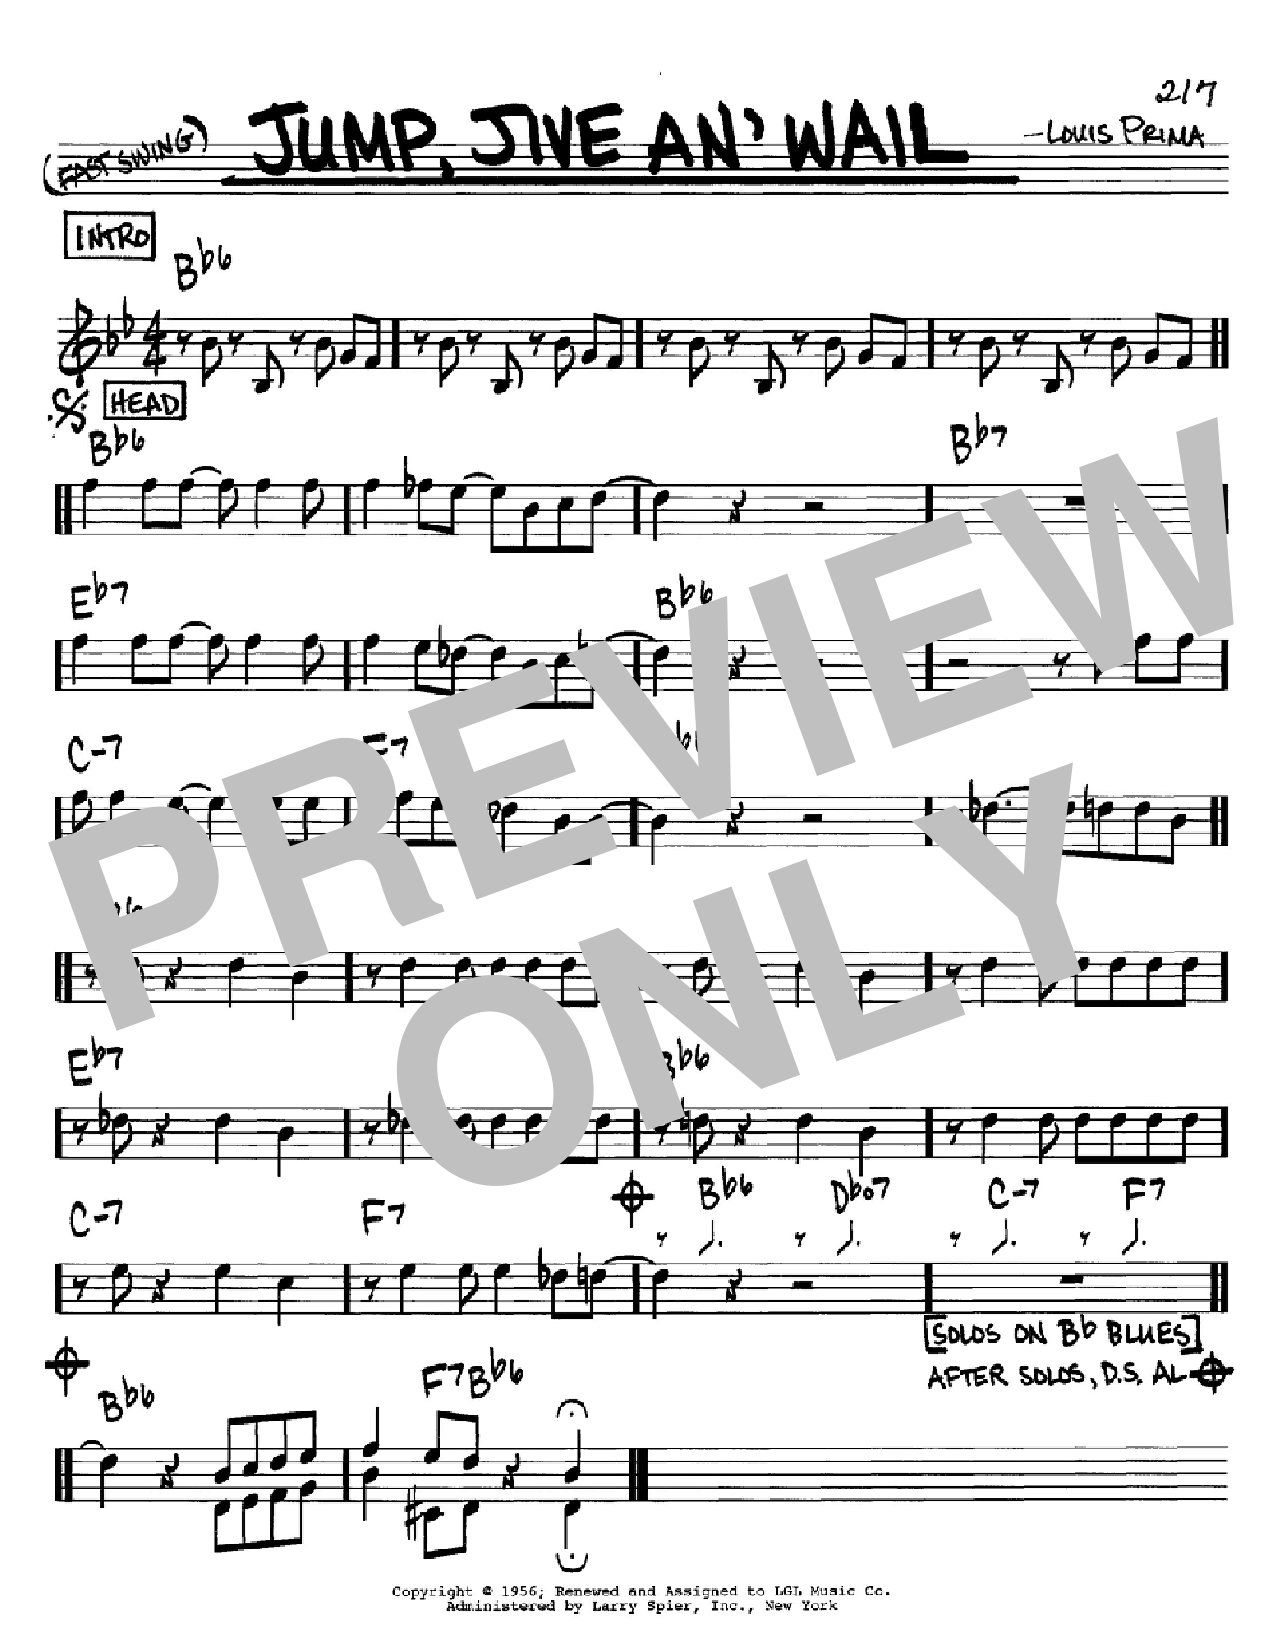 Louis Prima Jump, Jive An' Wail Sheet Music Notes & Chords for Keyboard - Download or Print PDF